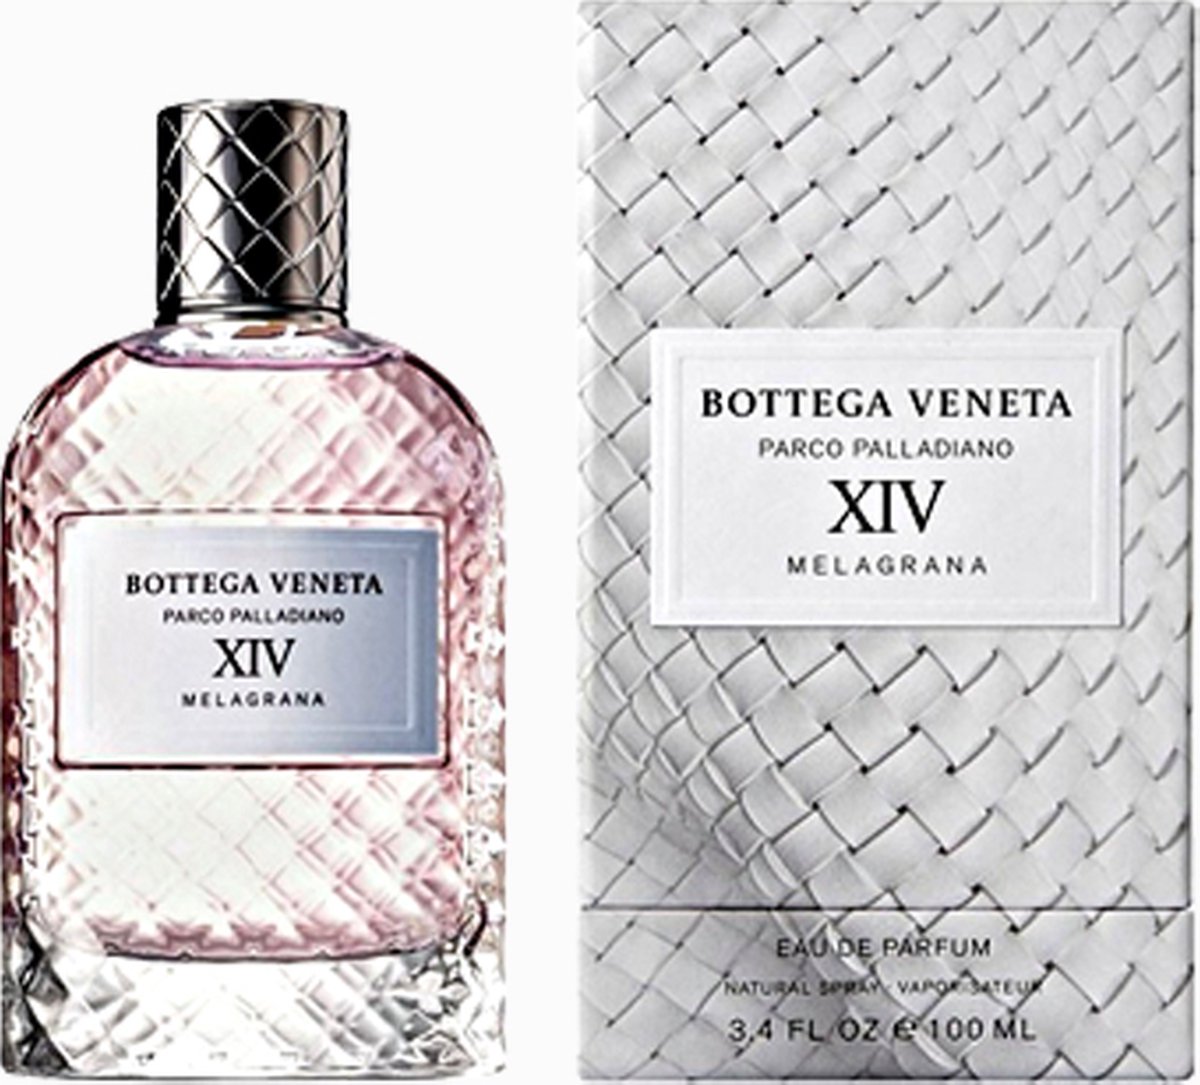 Bottega Veneta Parco Palladiano Xiv Melagrana - Eau de parfum spray - 100 ml